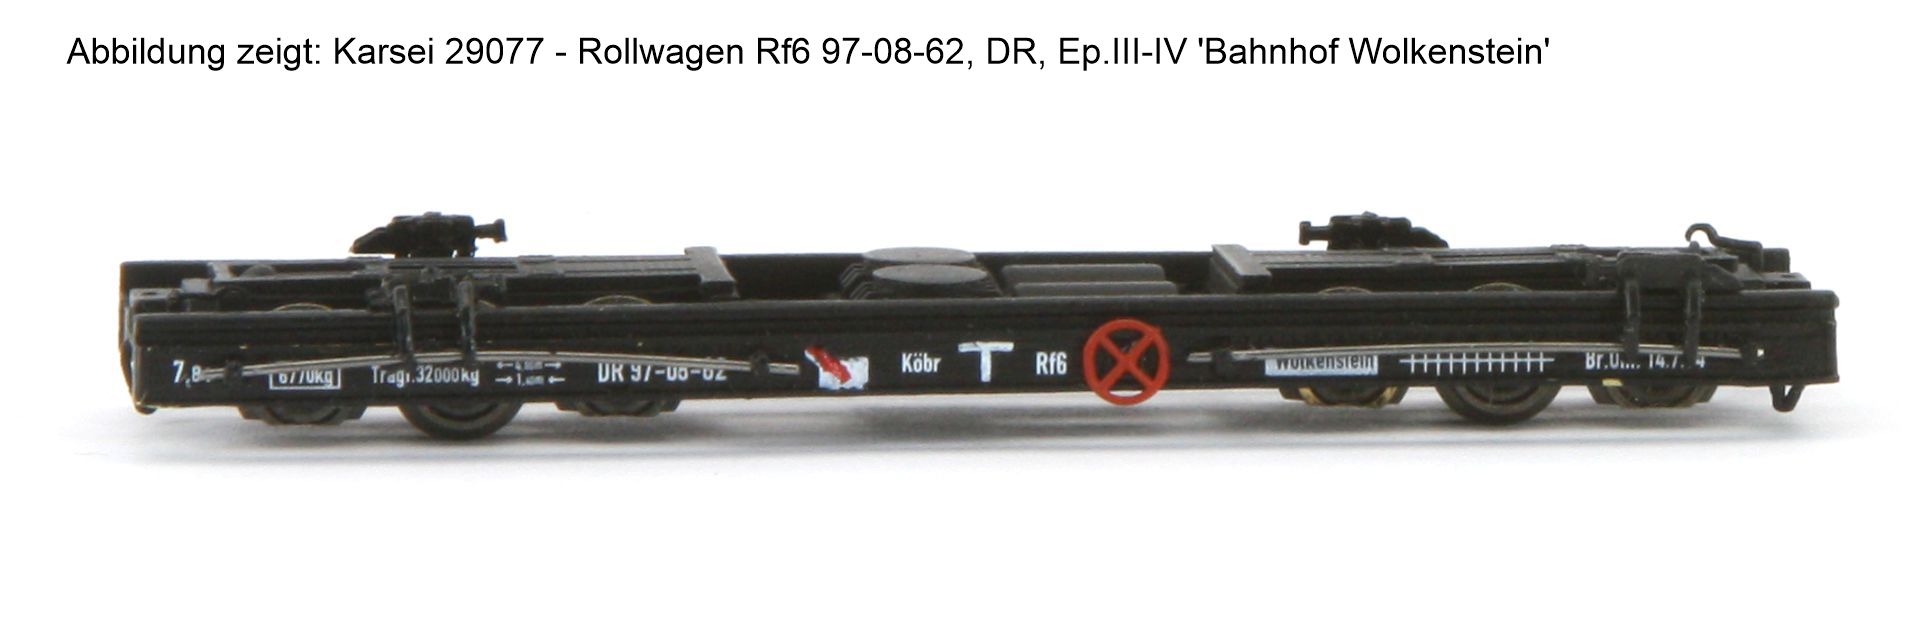 Karsei 29076 - Rollwagen Rf6 97-09-08, DR, Ep.III-IV 'Bahnhof Radbeul'